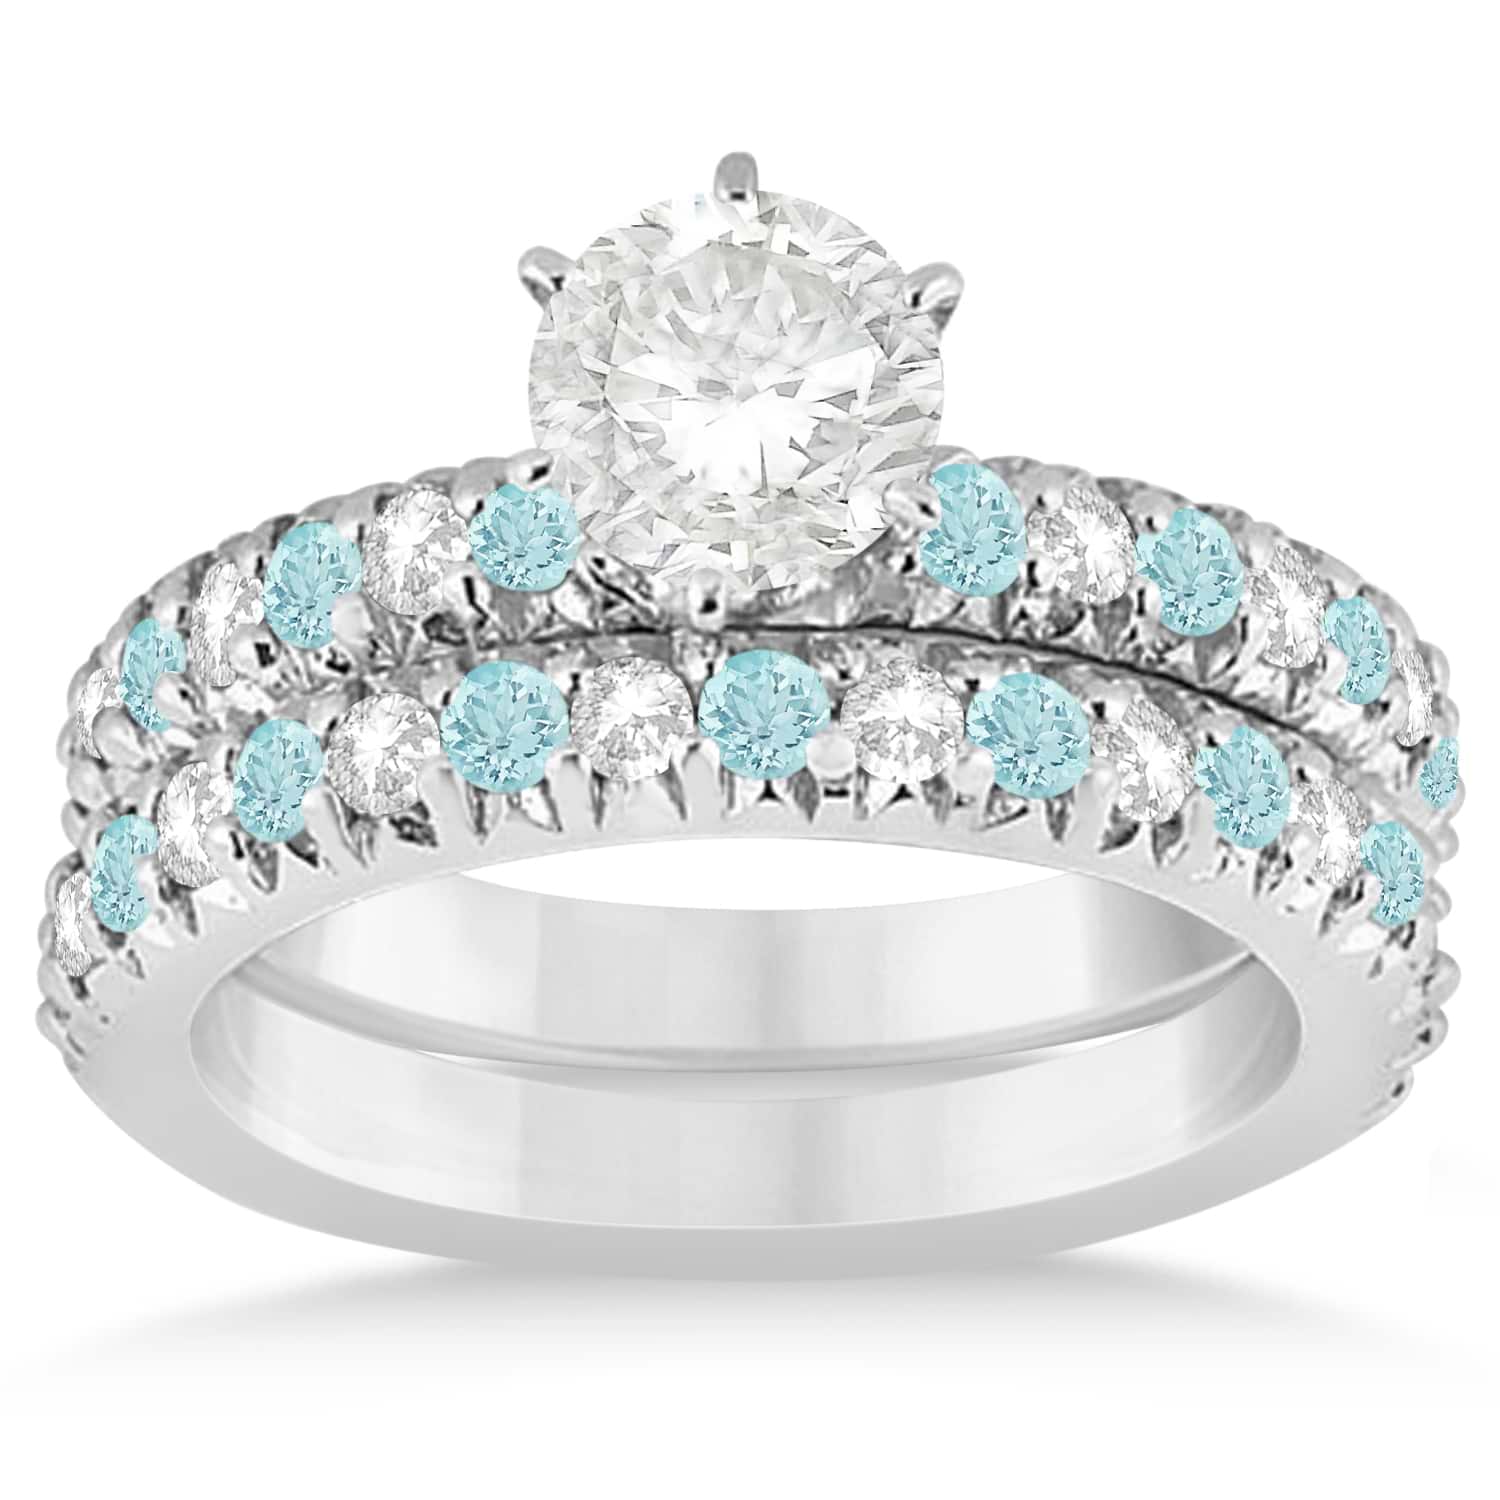 Aquamarine & Diamond Bridal Set Setting 18k White Gold 1.14ct